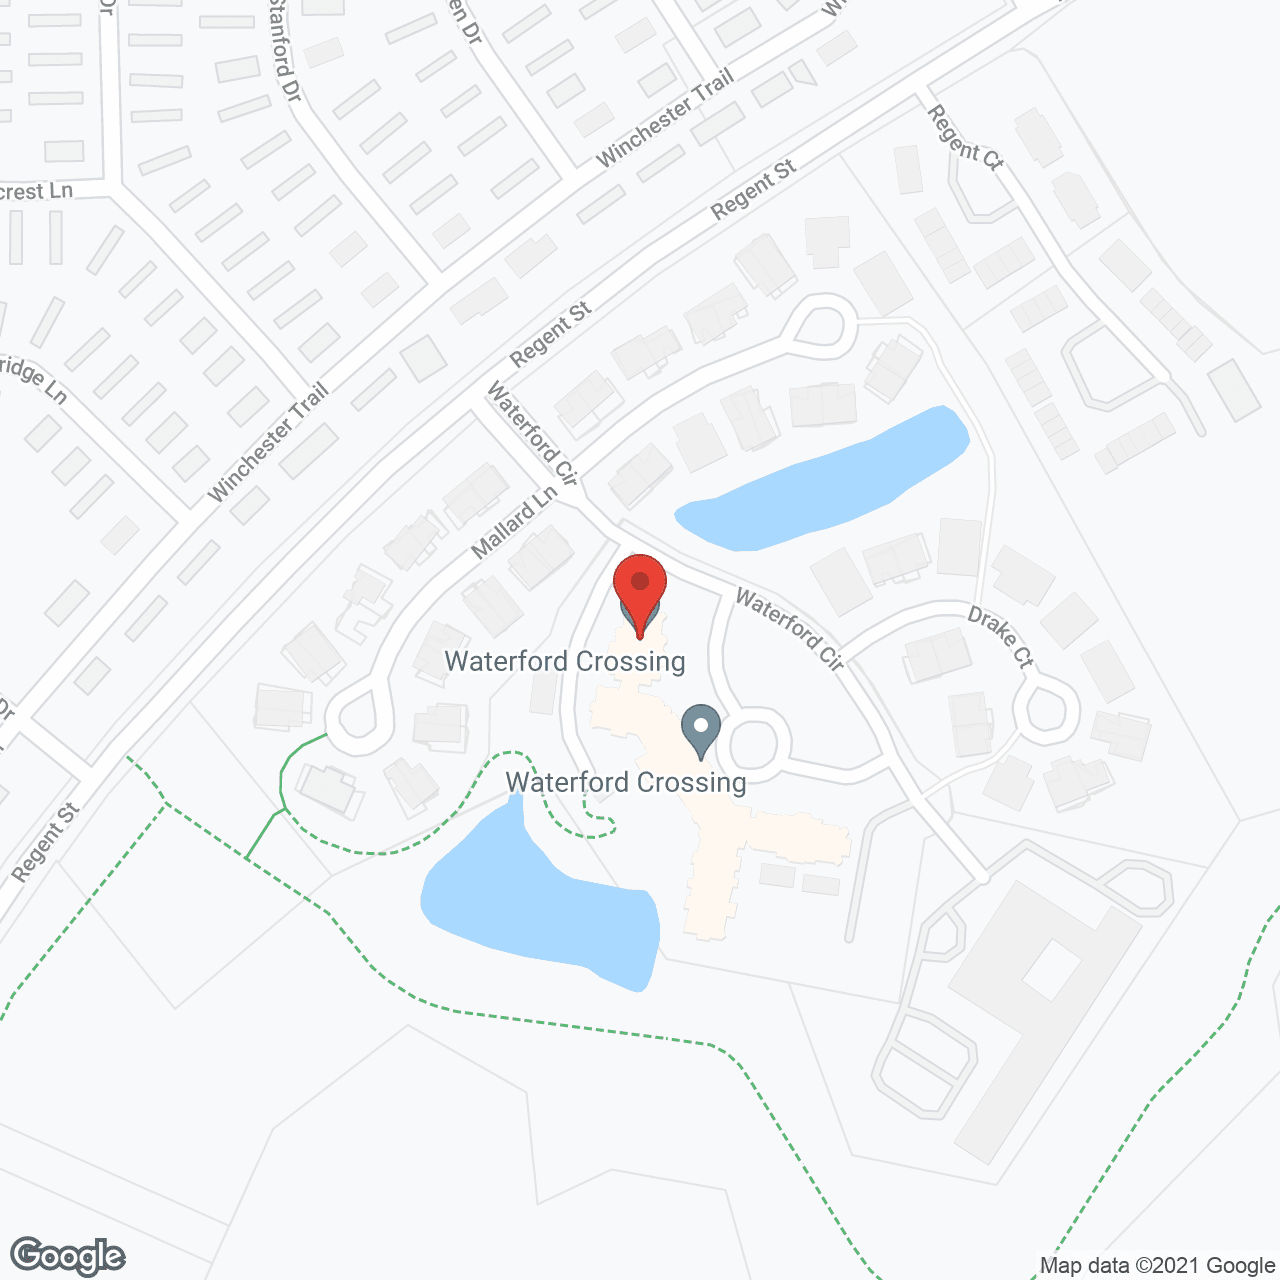 Waterford Crossing in google map